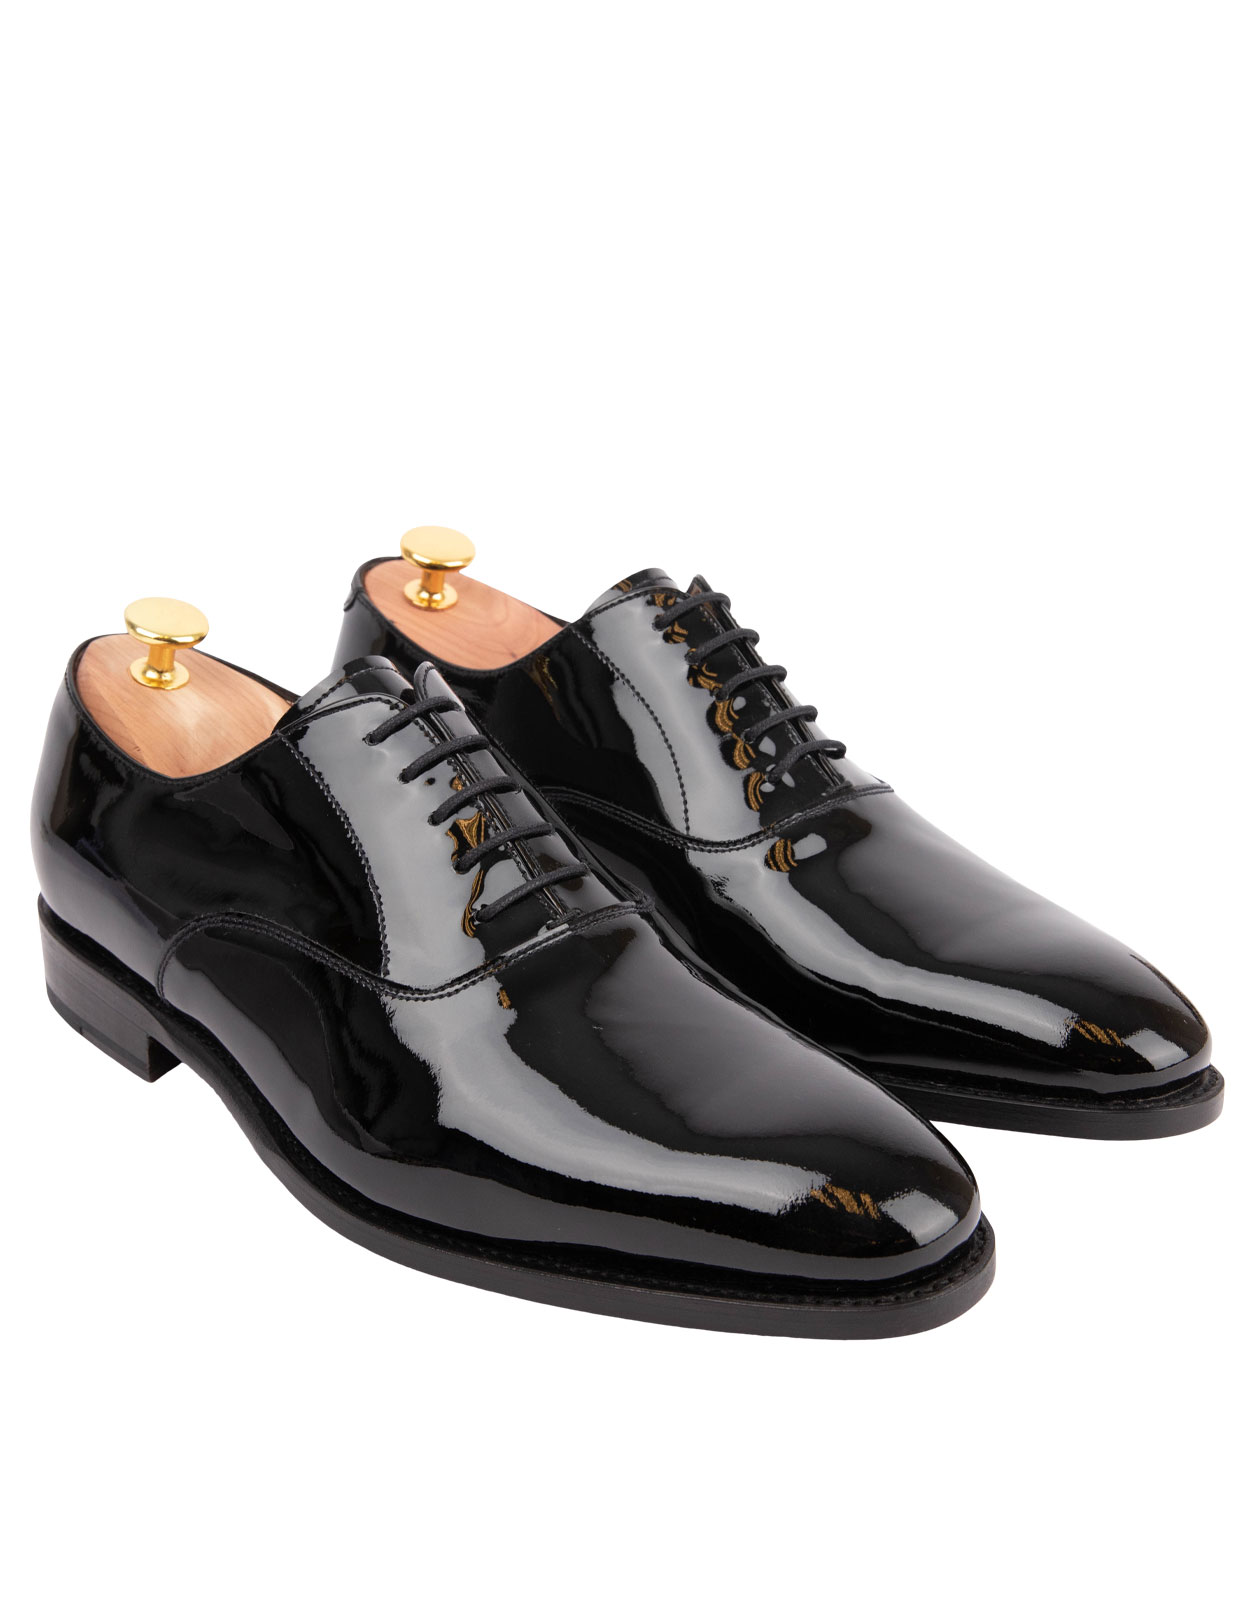 Patent Leather Oxford Shoe Black Stl 11.5